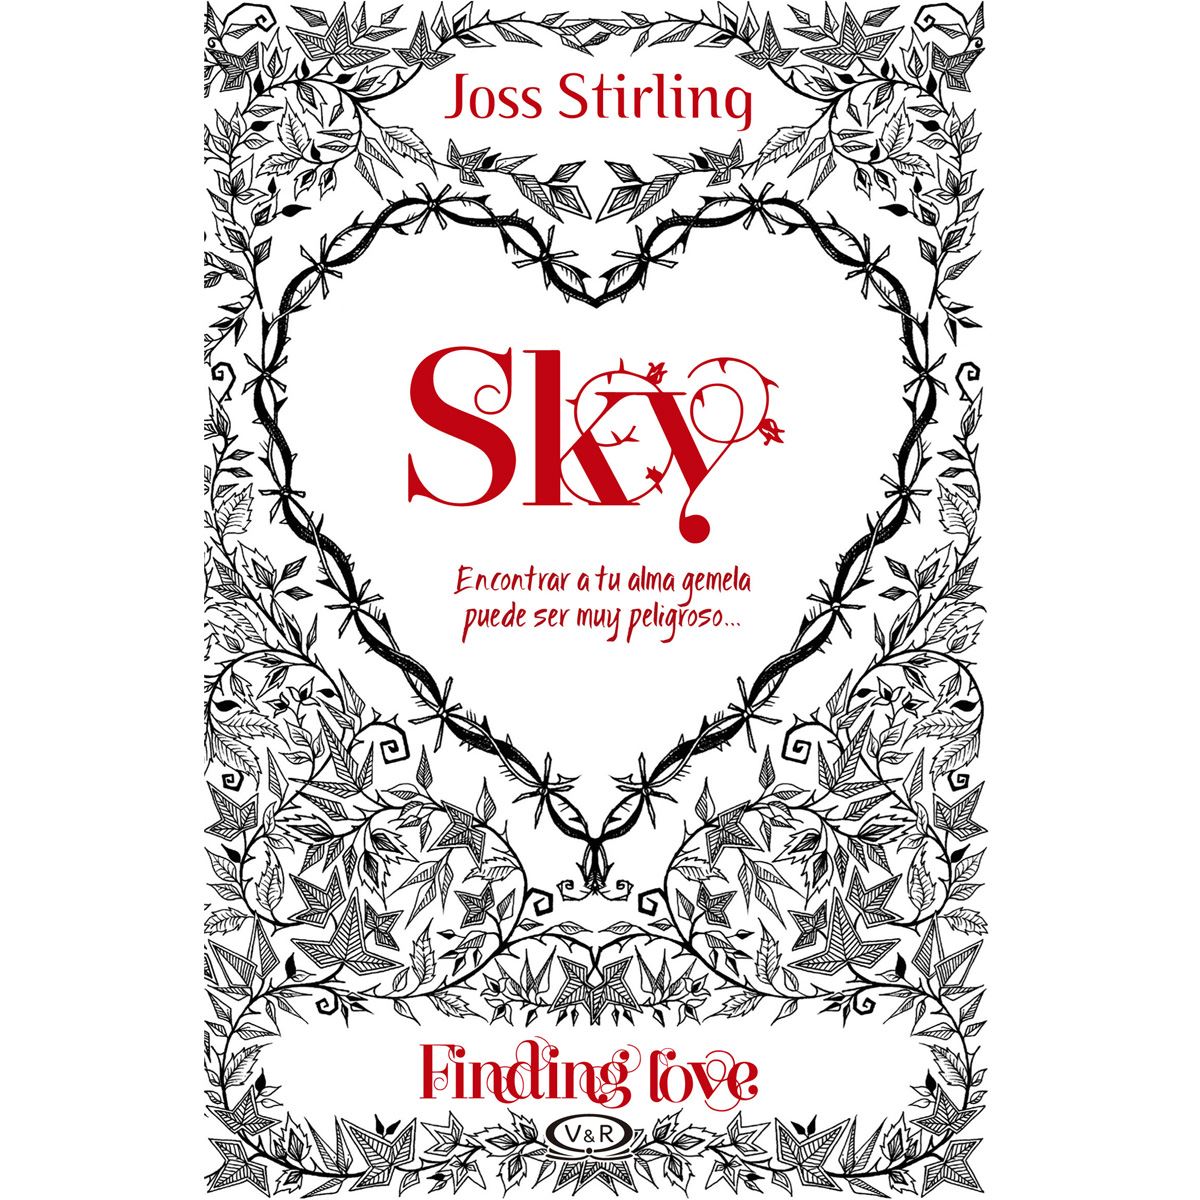 Sky&#44;  Finding Love